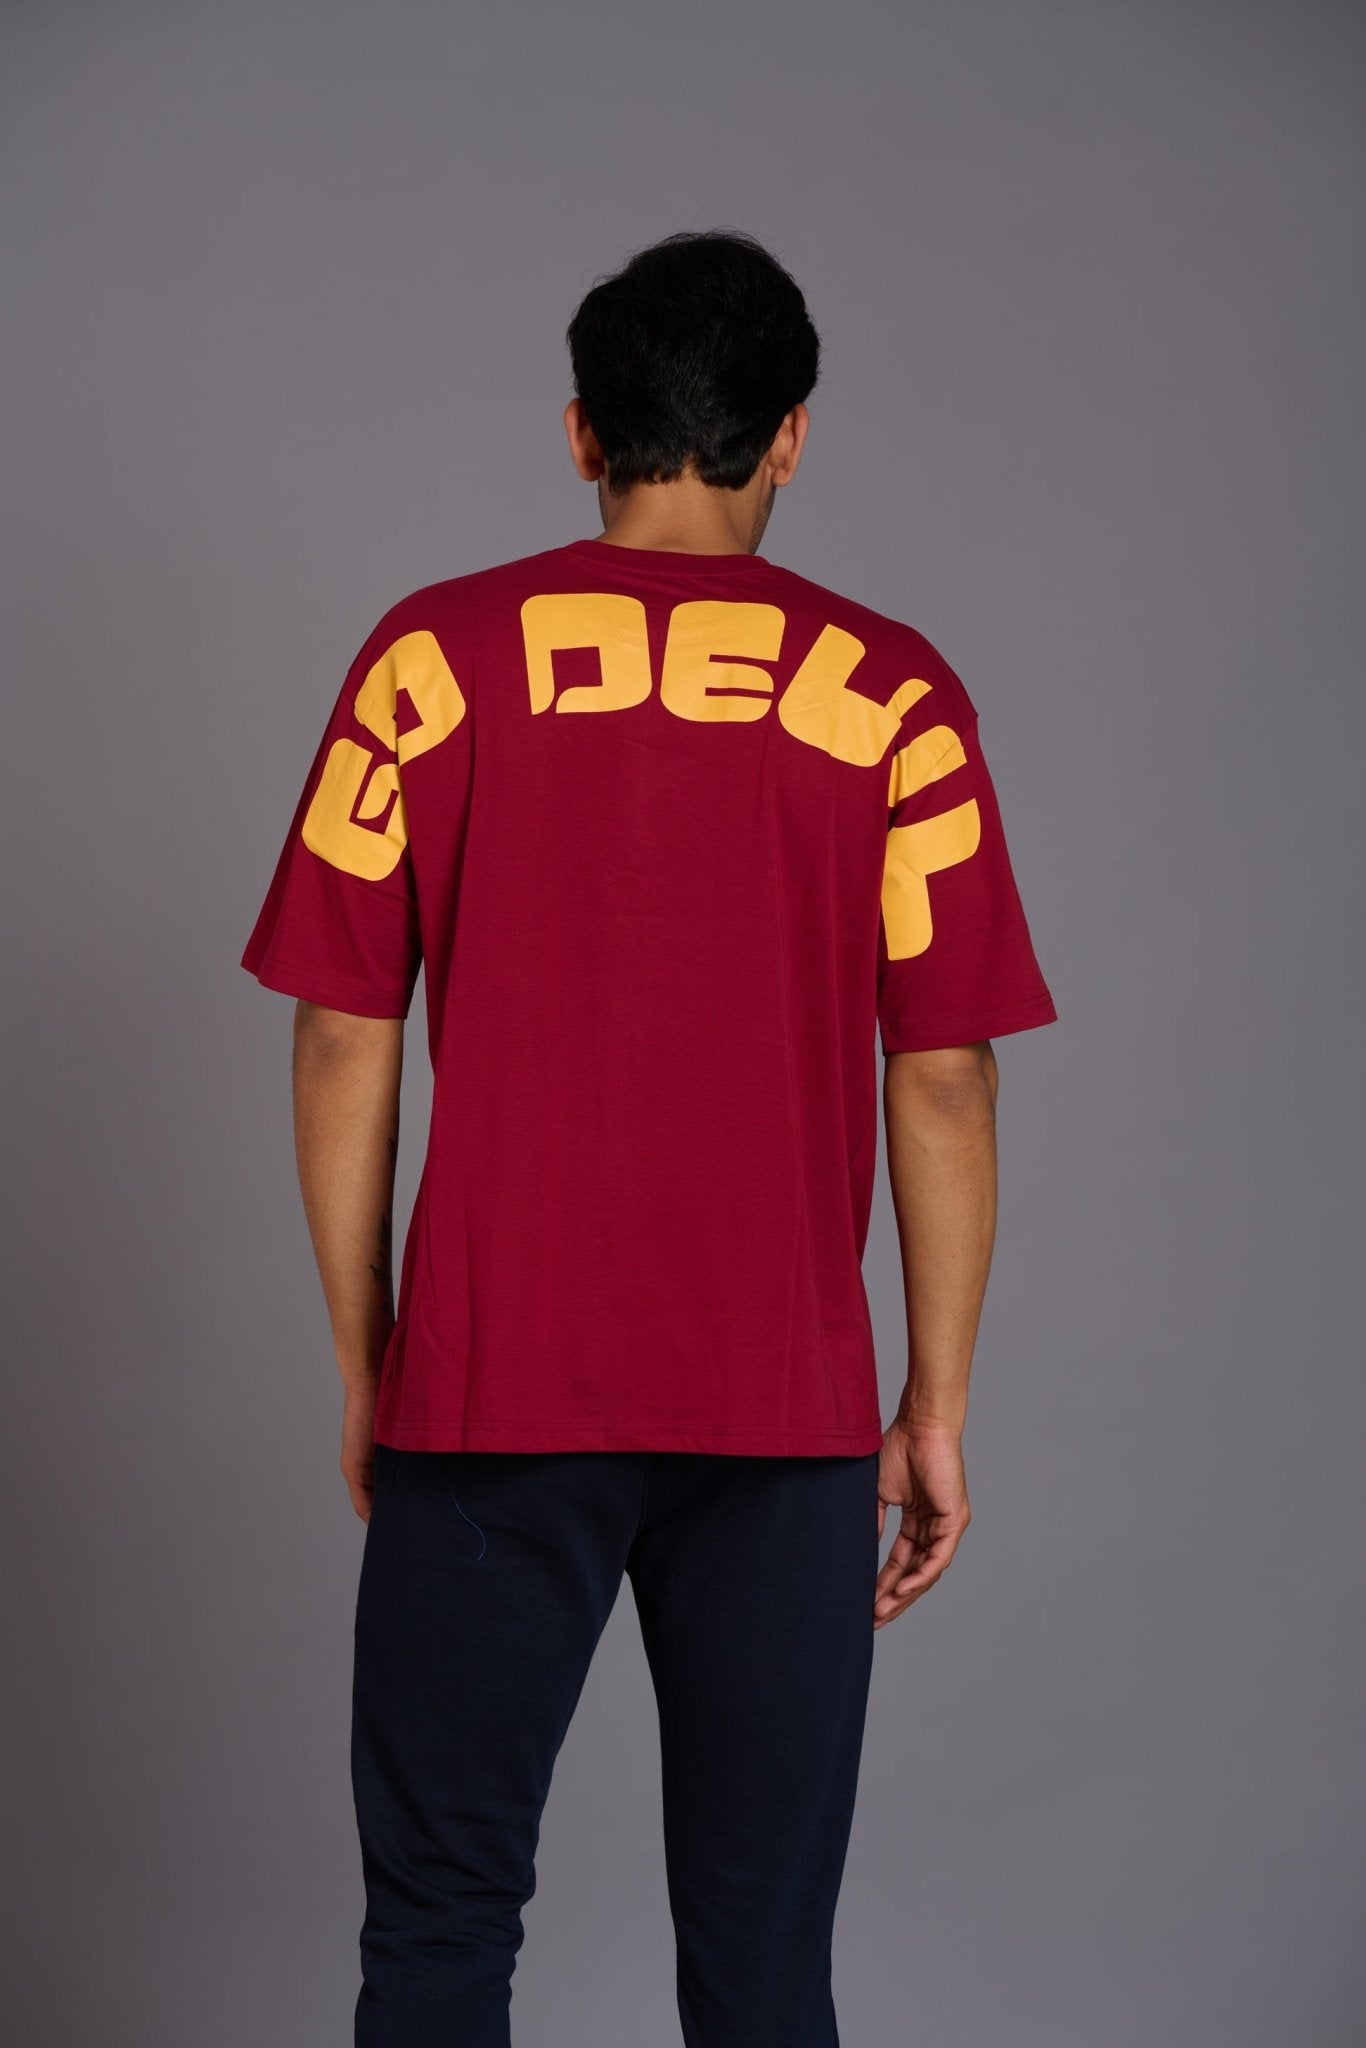 Go Devil Printed Burgundy Color Oversized T-Shirt for Men - Go Devil